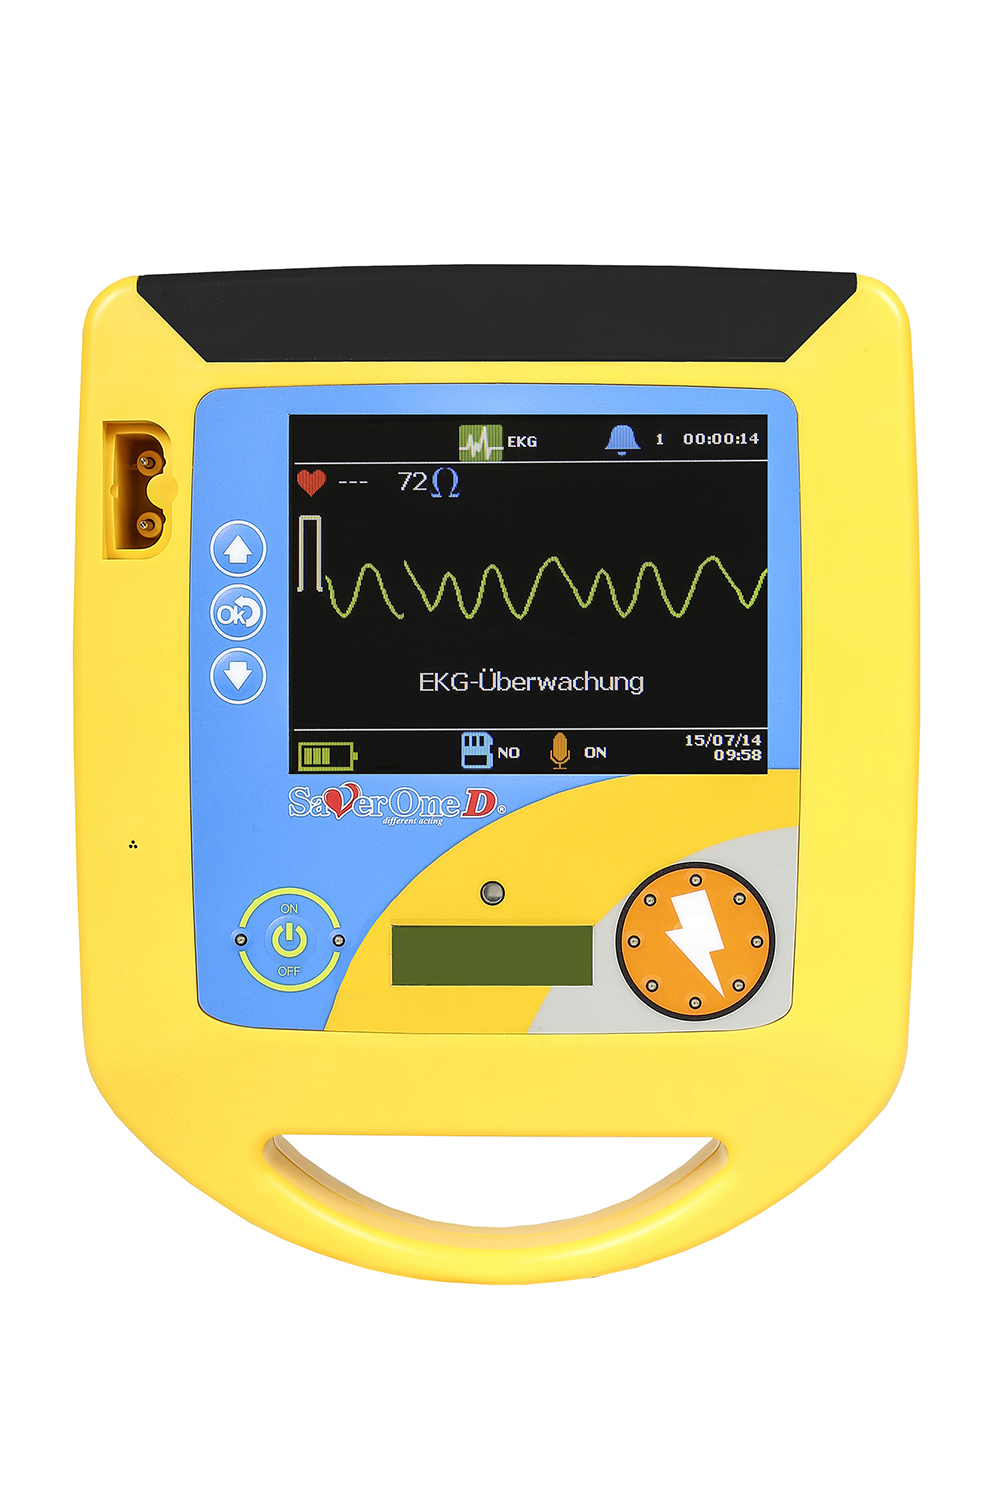 Saver One AED Profi Defibrillator Modell D / Drucker / 360 Joule / Akku Upgrade